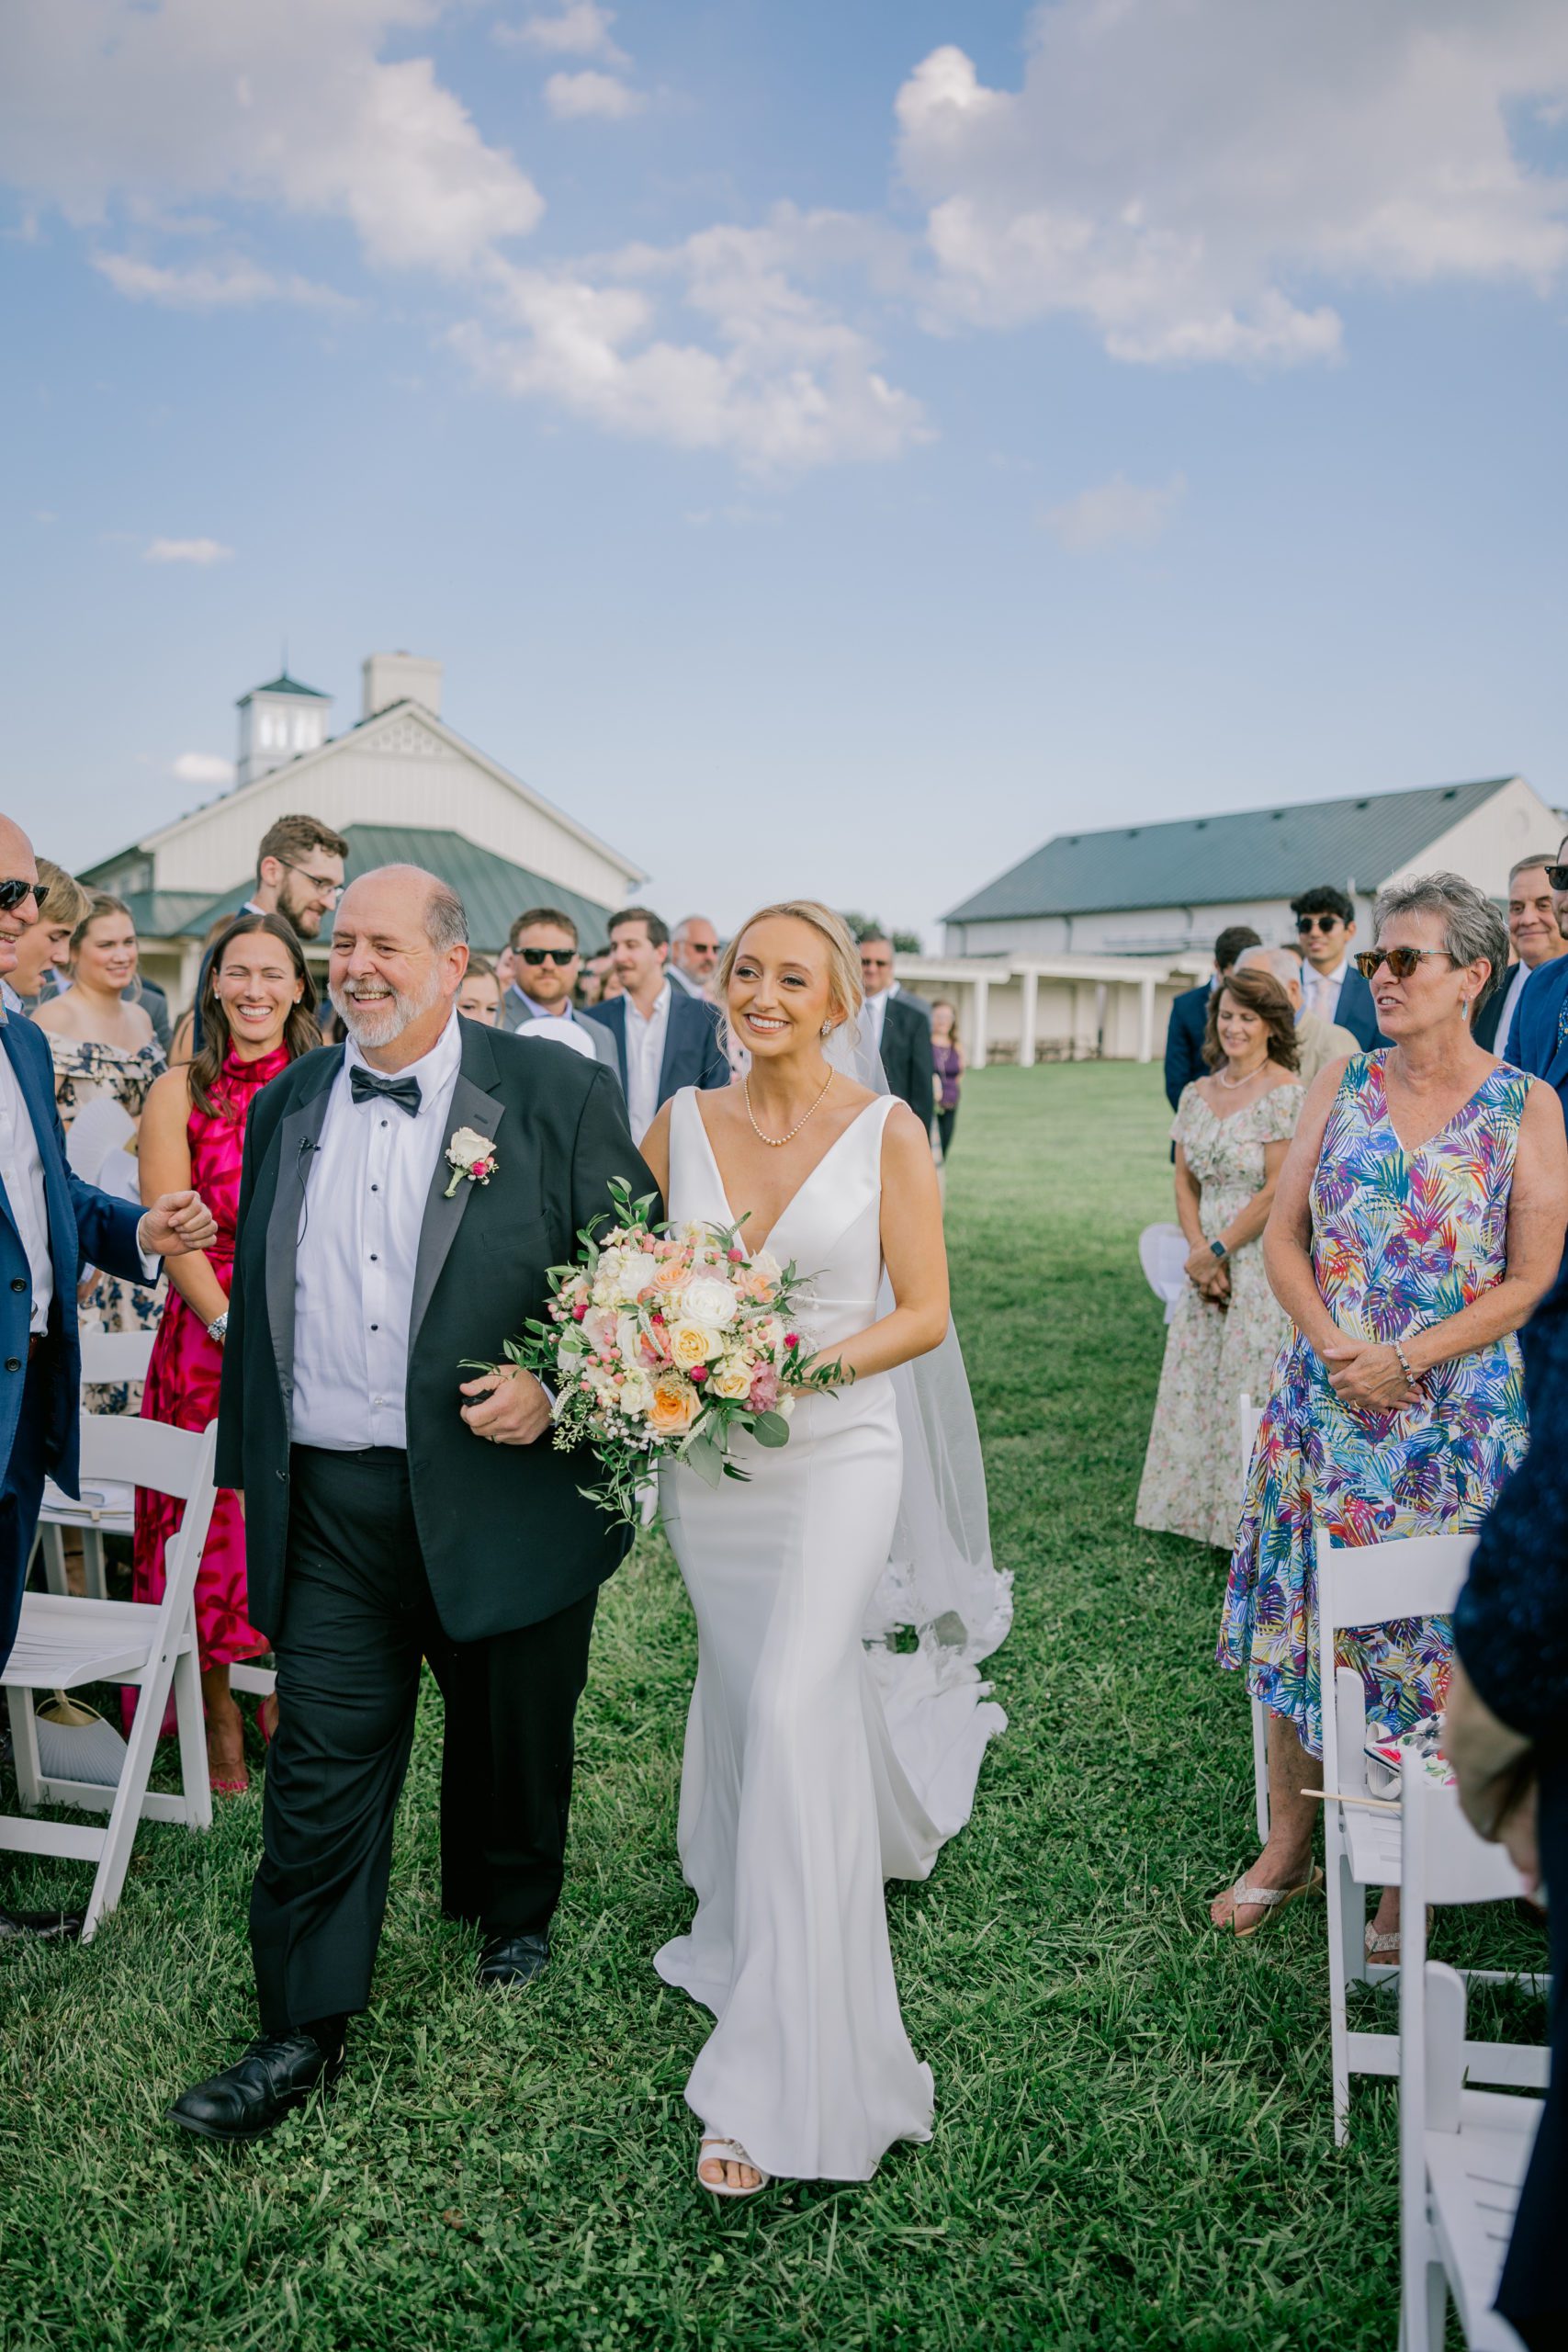 King Family Vineyards Wedding in Crozet, Virginia